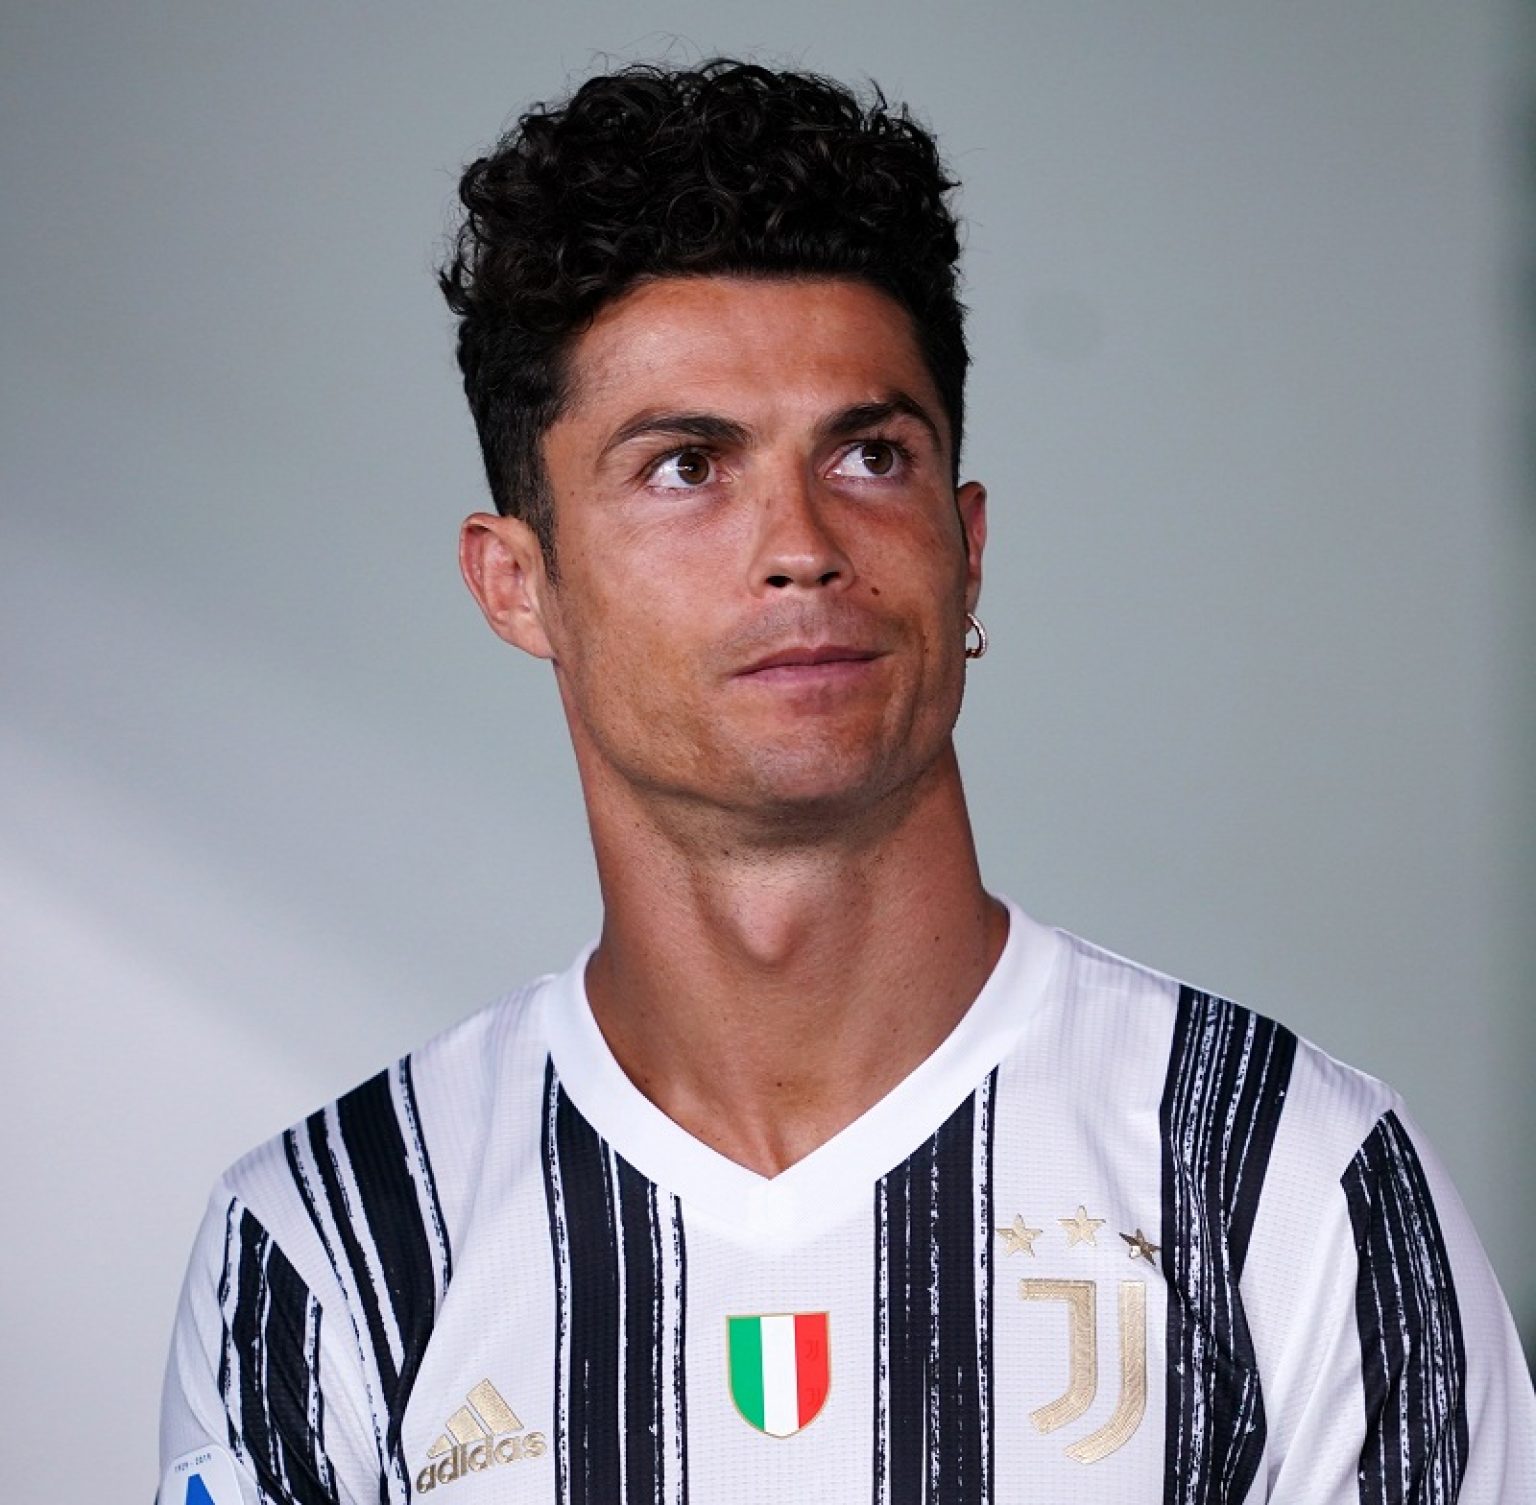 Cristiano Ronaldos Haircut 1 1536x1505 